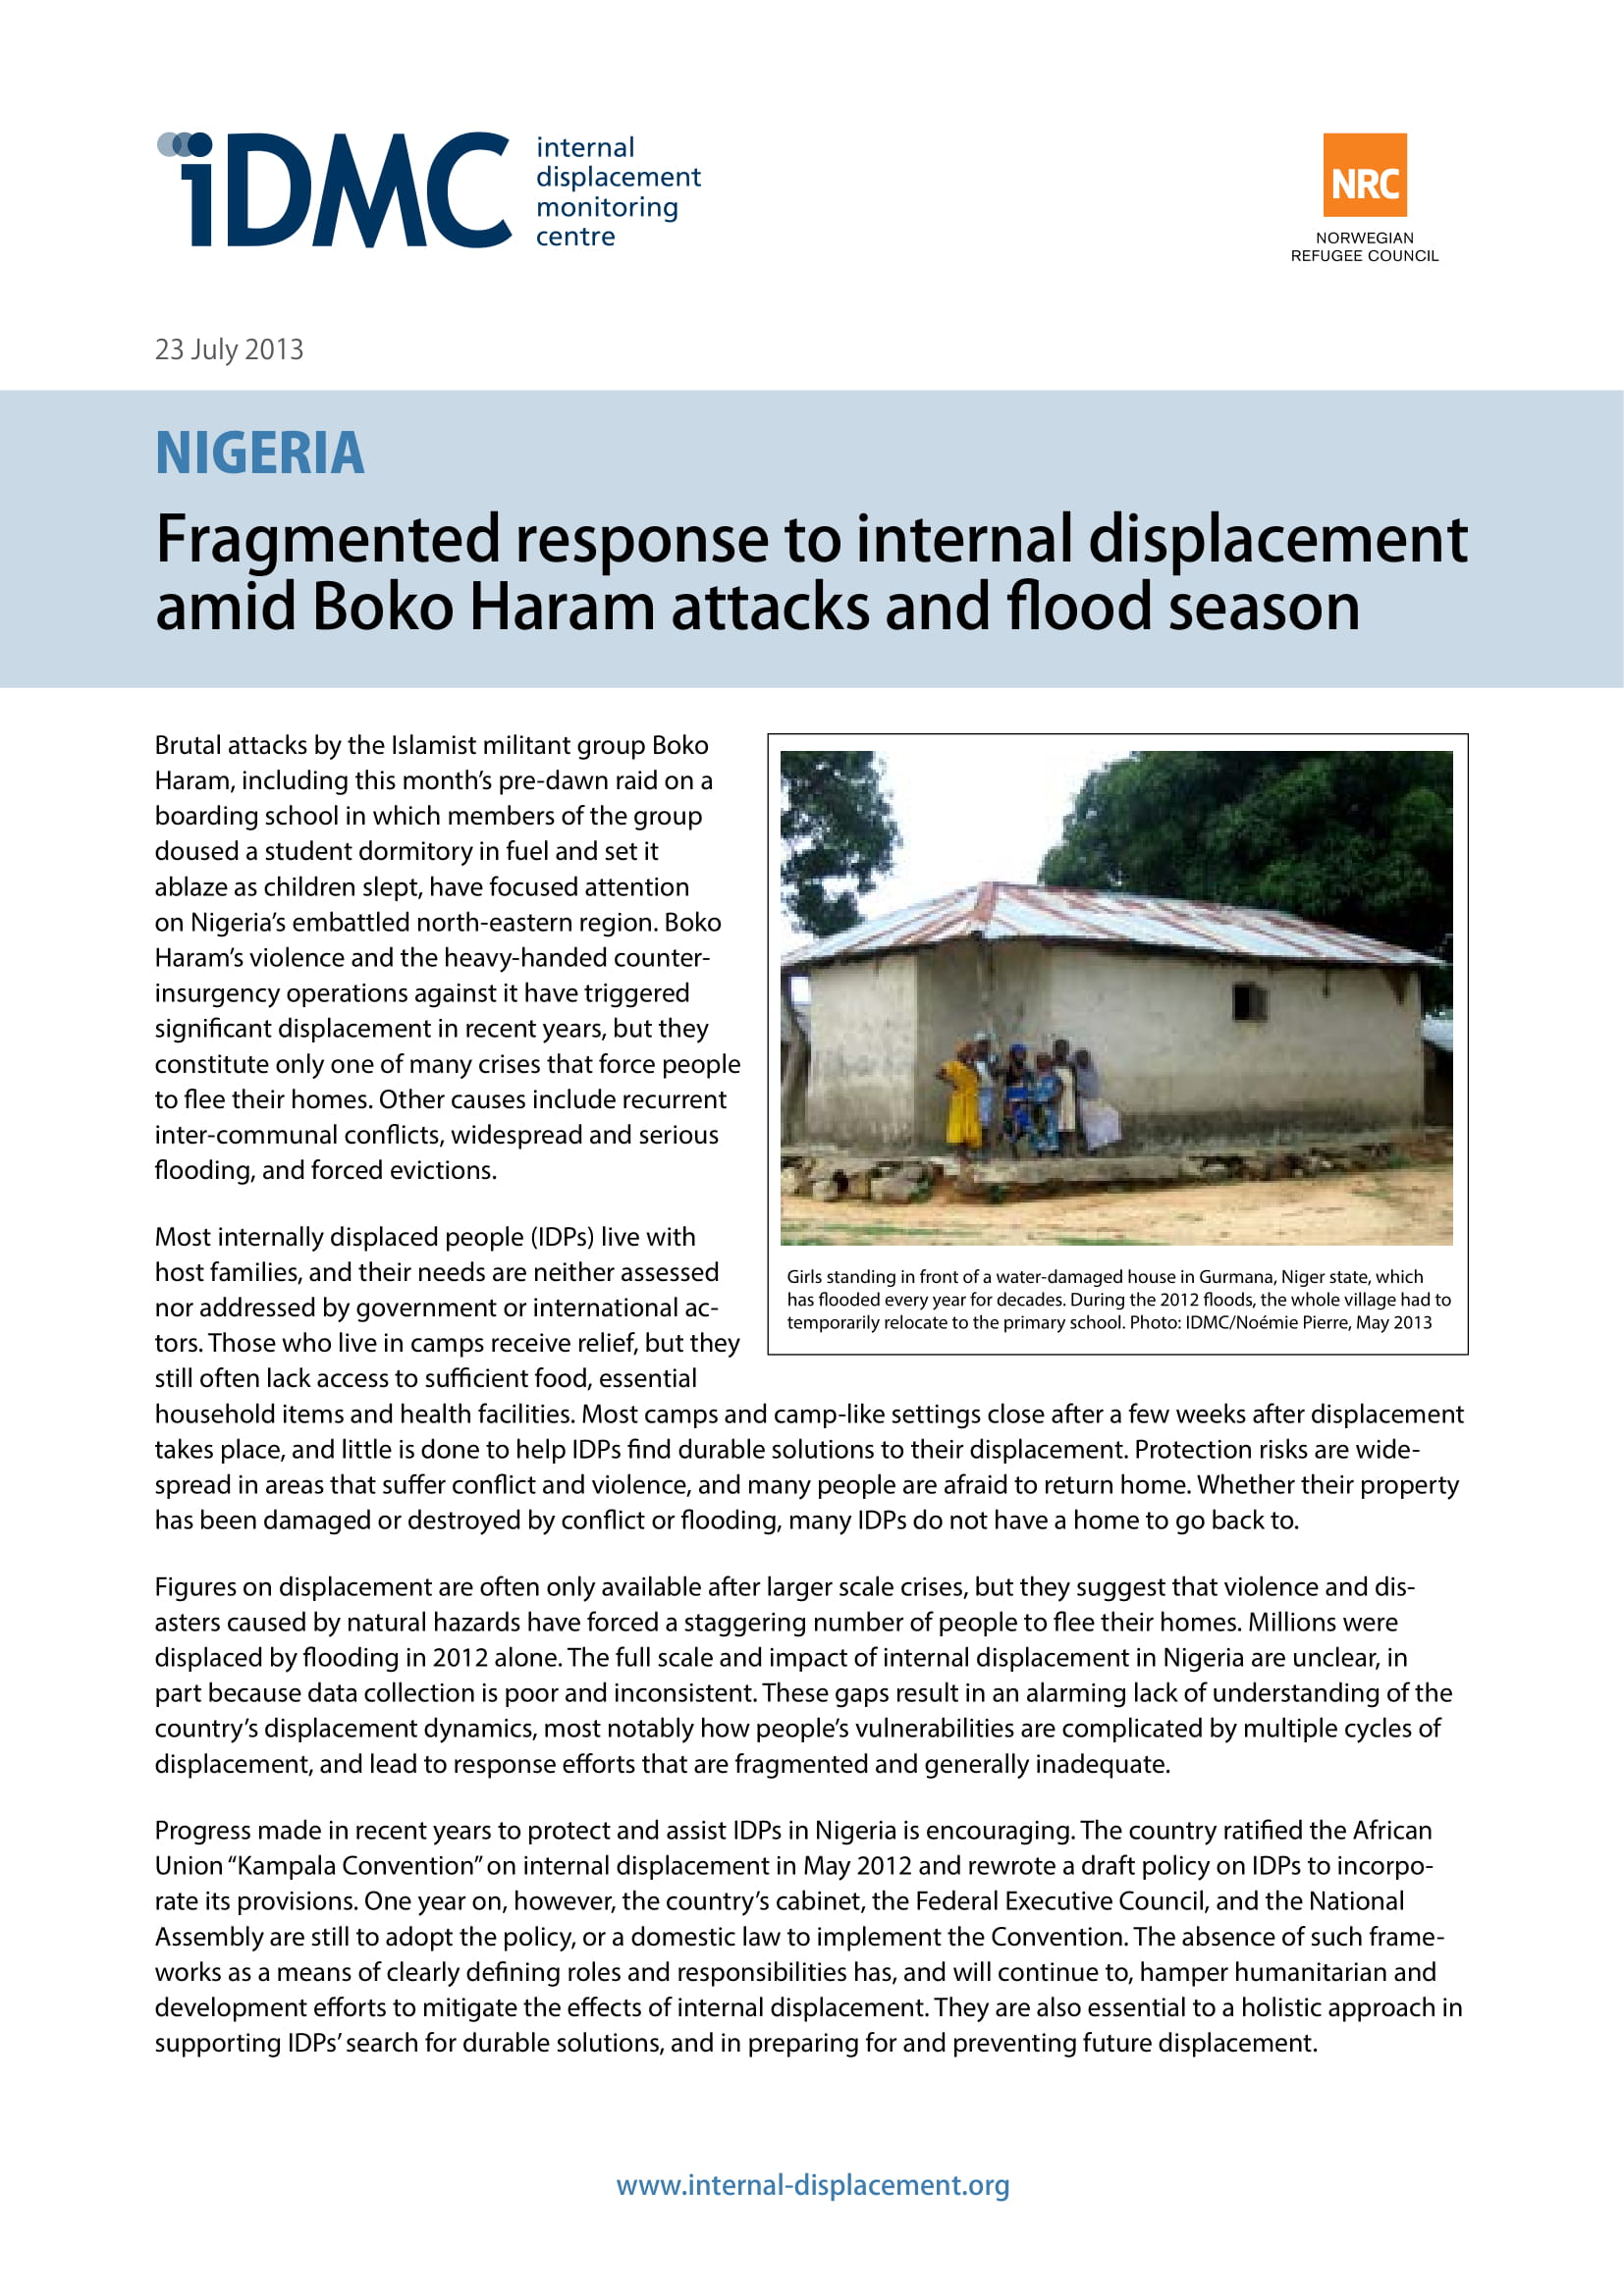 Nigeria: Fragmented response to internal displacement amid Boko Haram attacks and flood season